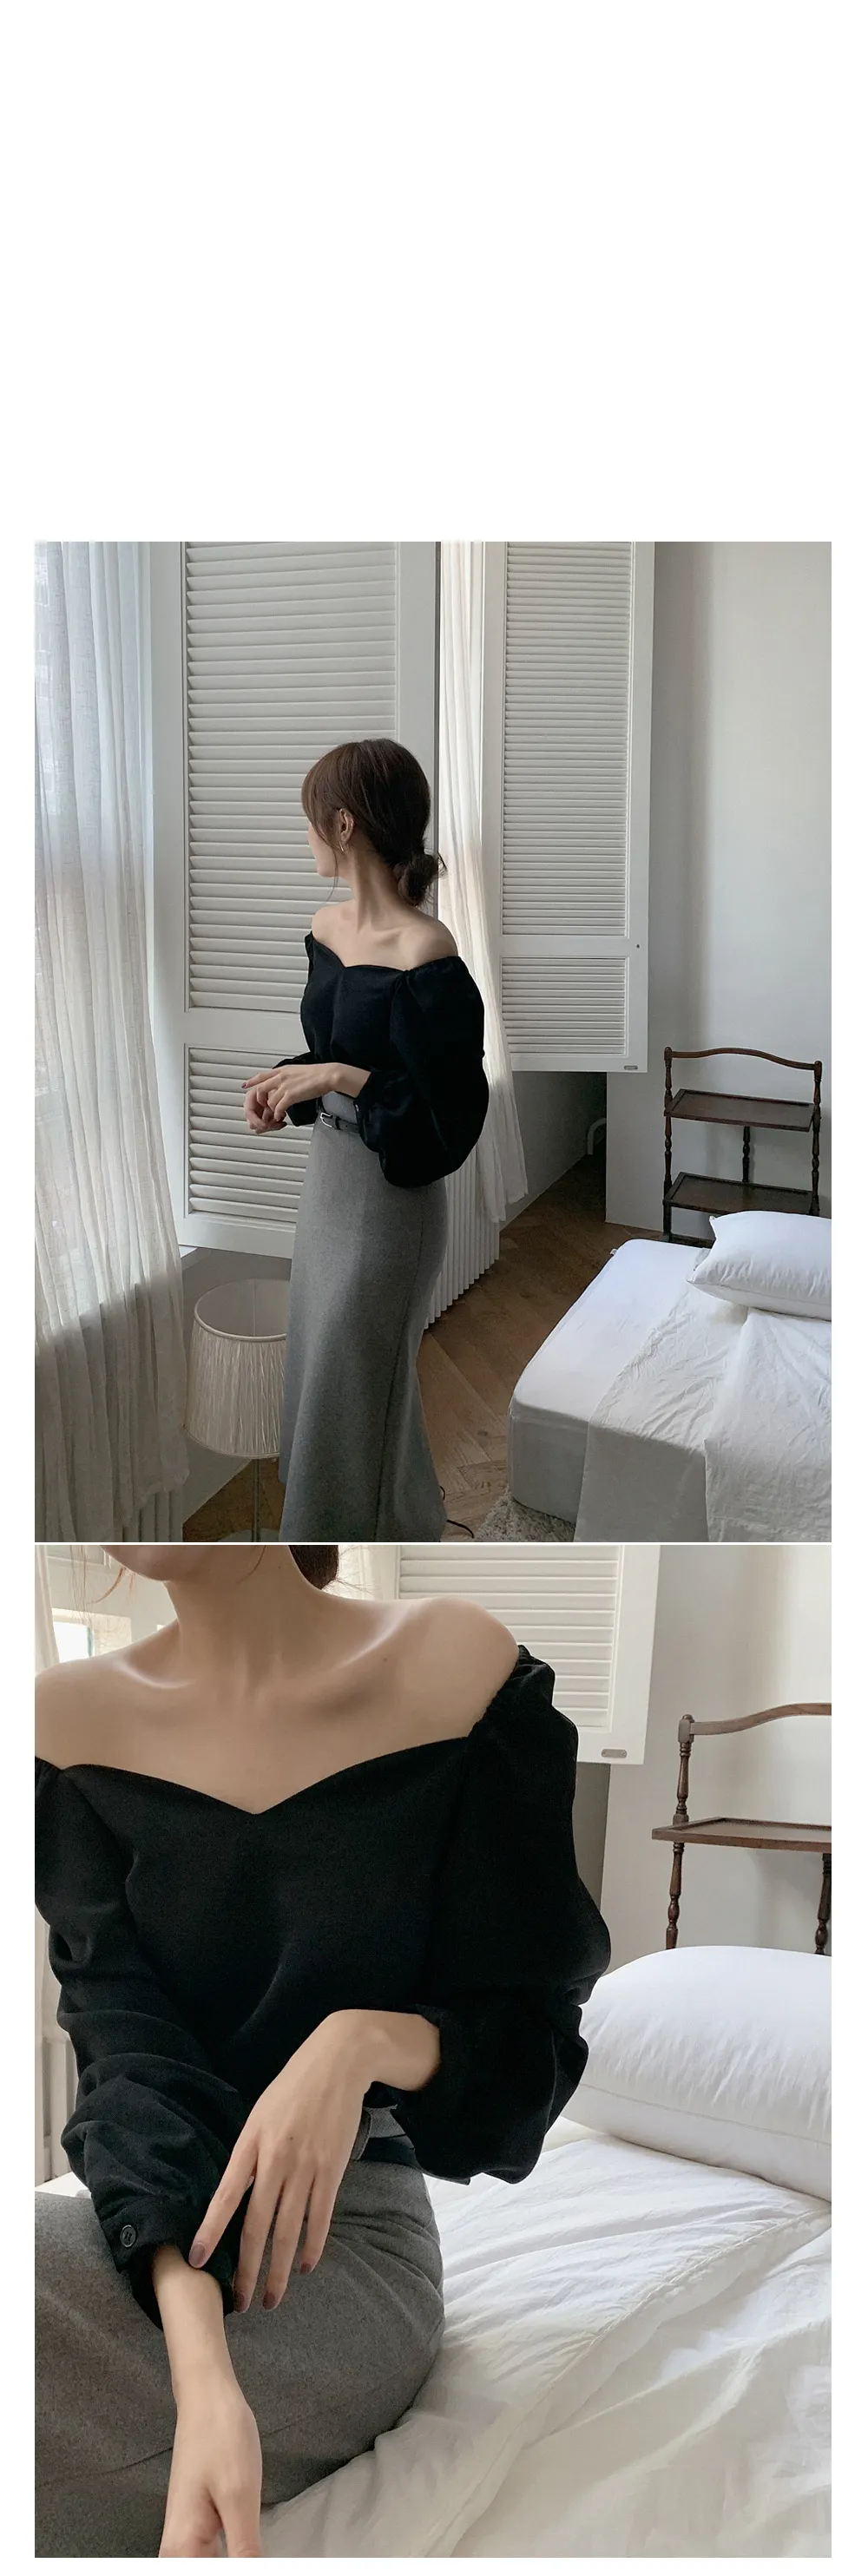 blusa feminina vintage estilo camisa preta de manga comprida com pétalas gola sexy para blusa feminina elegante